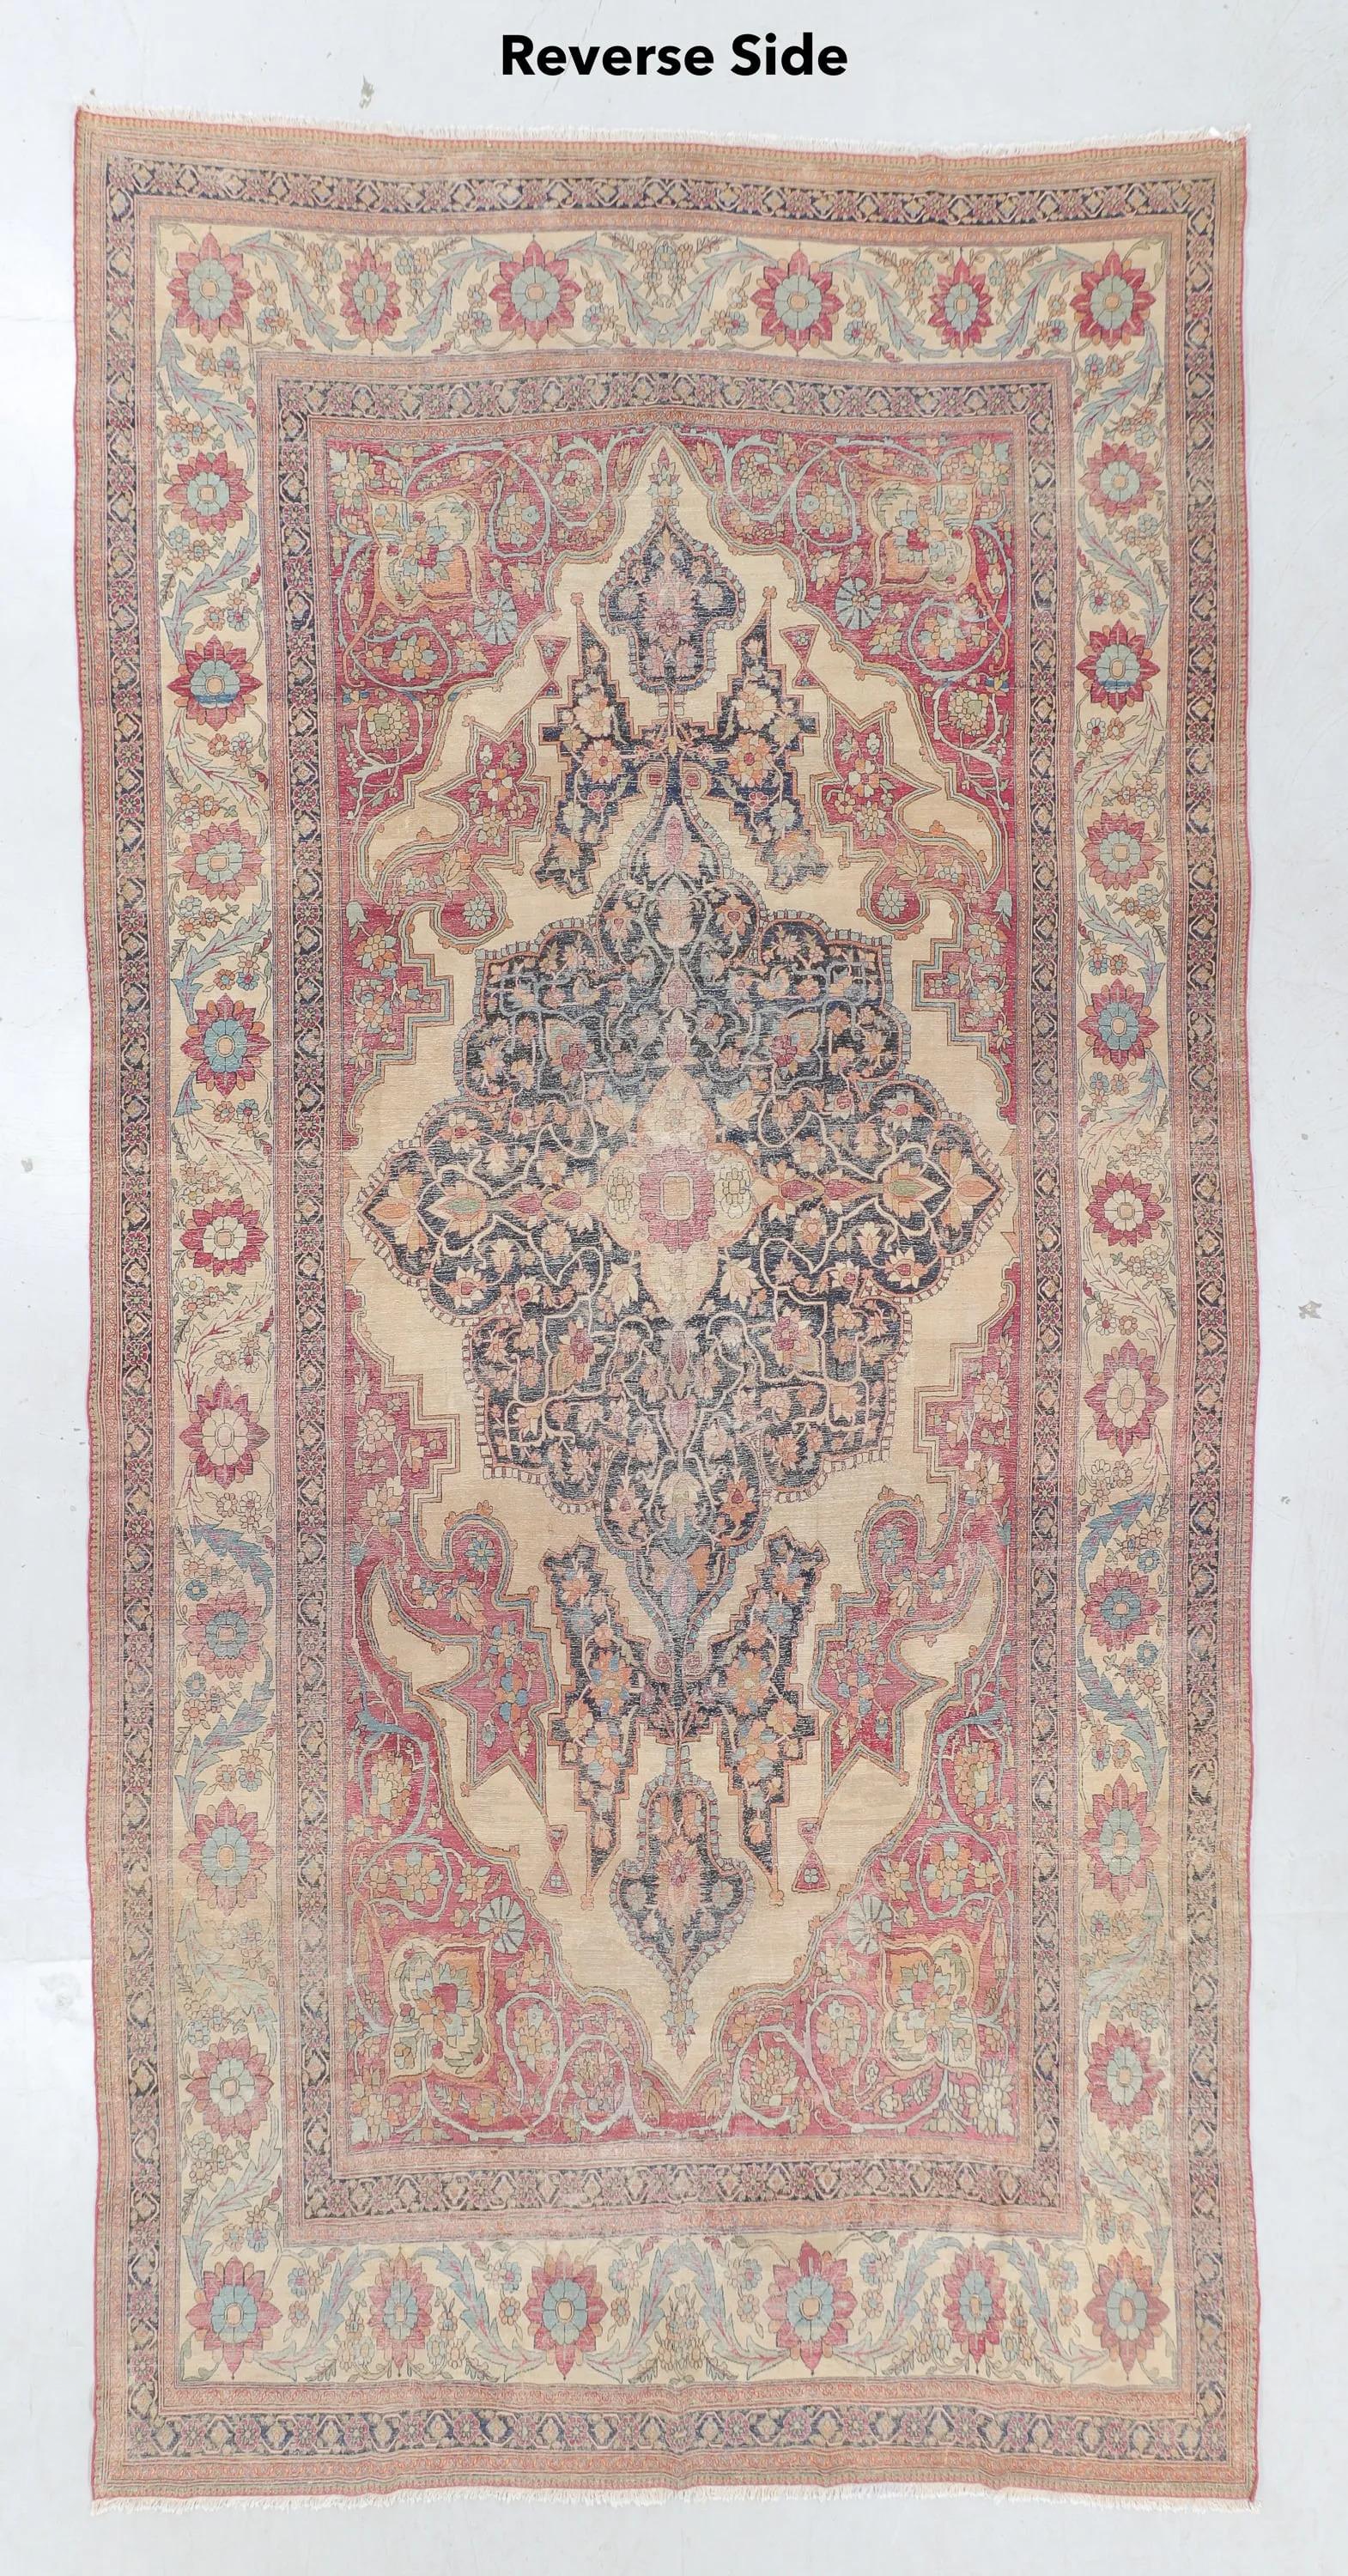 Late 19th Century Handmade Antique Persian Kerman Lavar Rug 9.4' x 18.8', 1870s - 2B30 For Sale